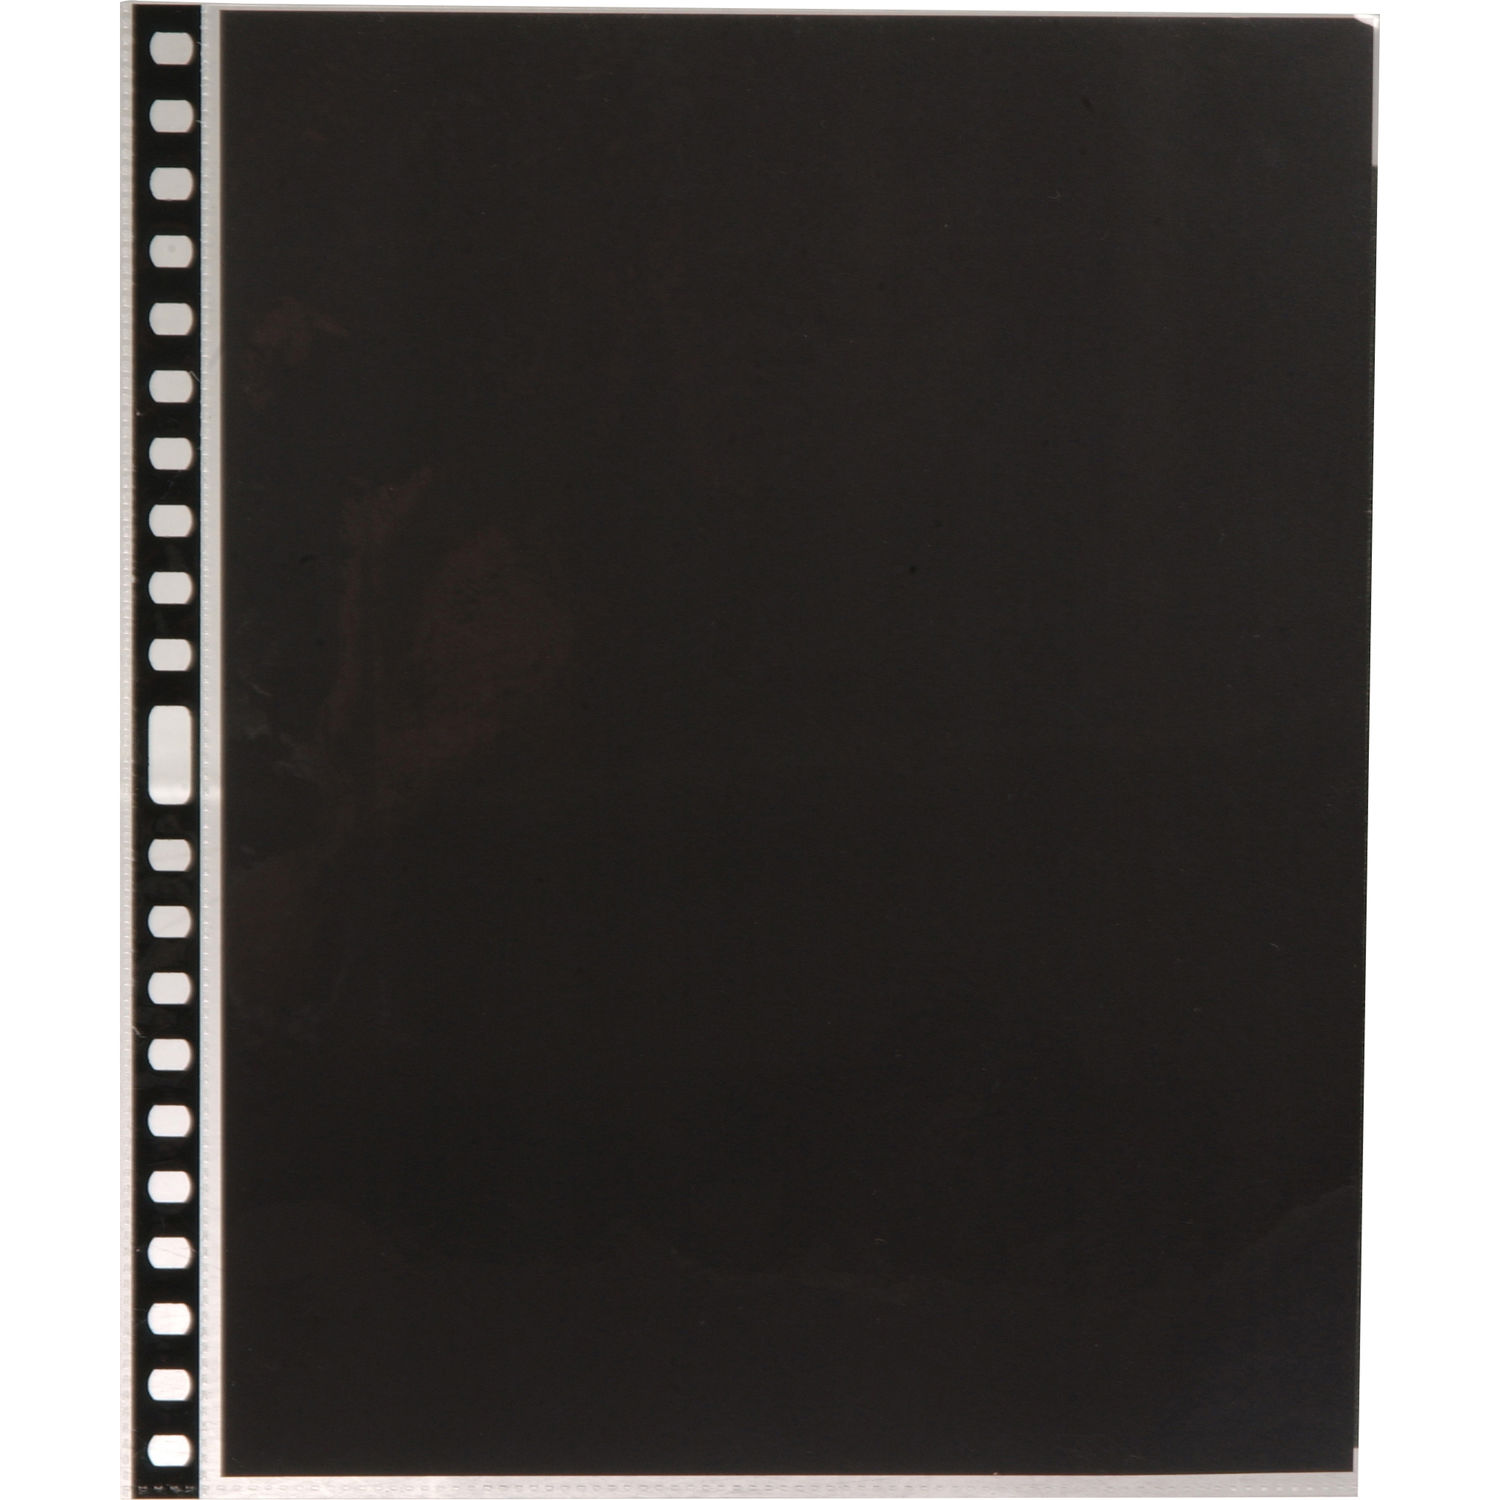 Keba Frost à 3,8 3Ring Transparent 8,5 x 11 cm 